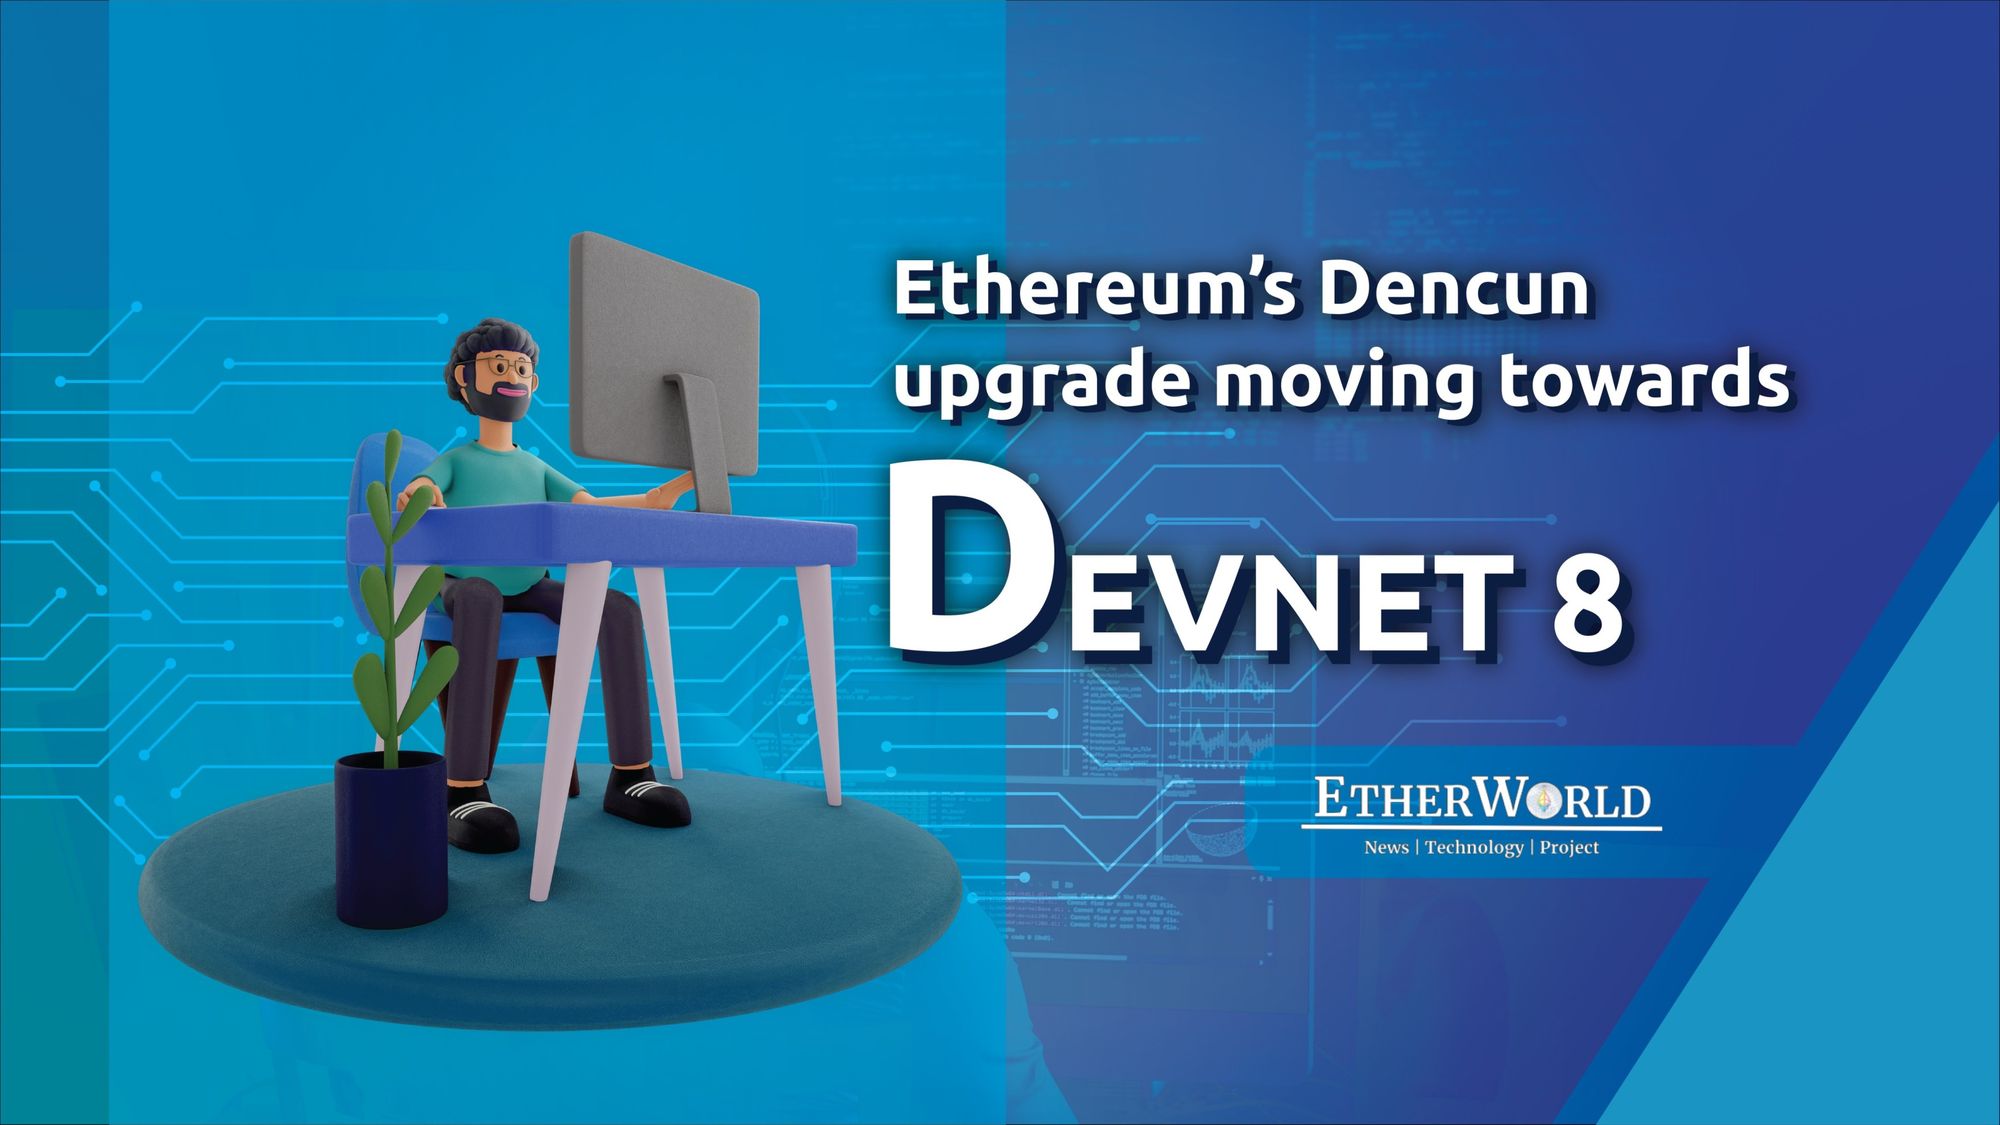 Ethereum's Dencun upgrade moving towards Devnet 8